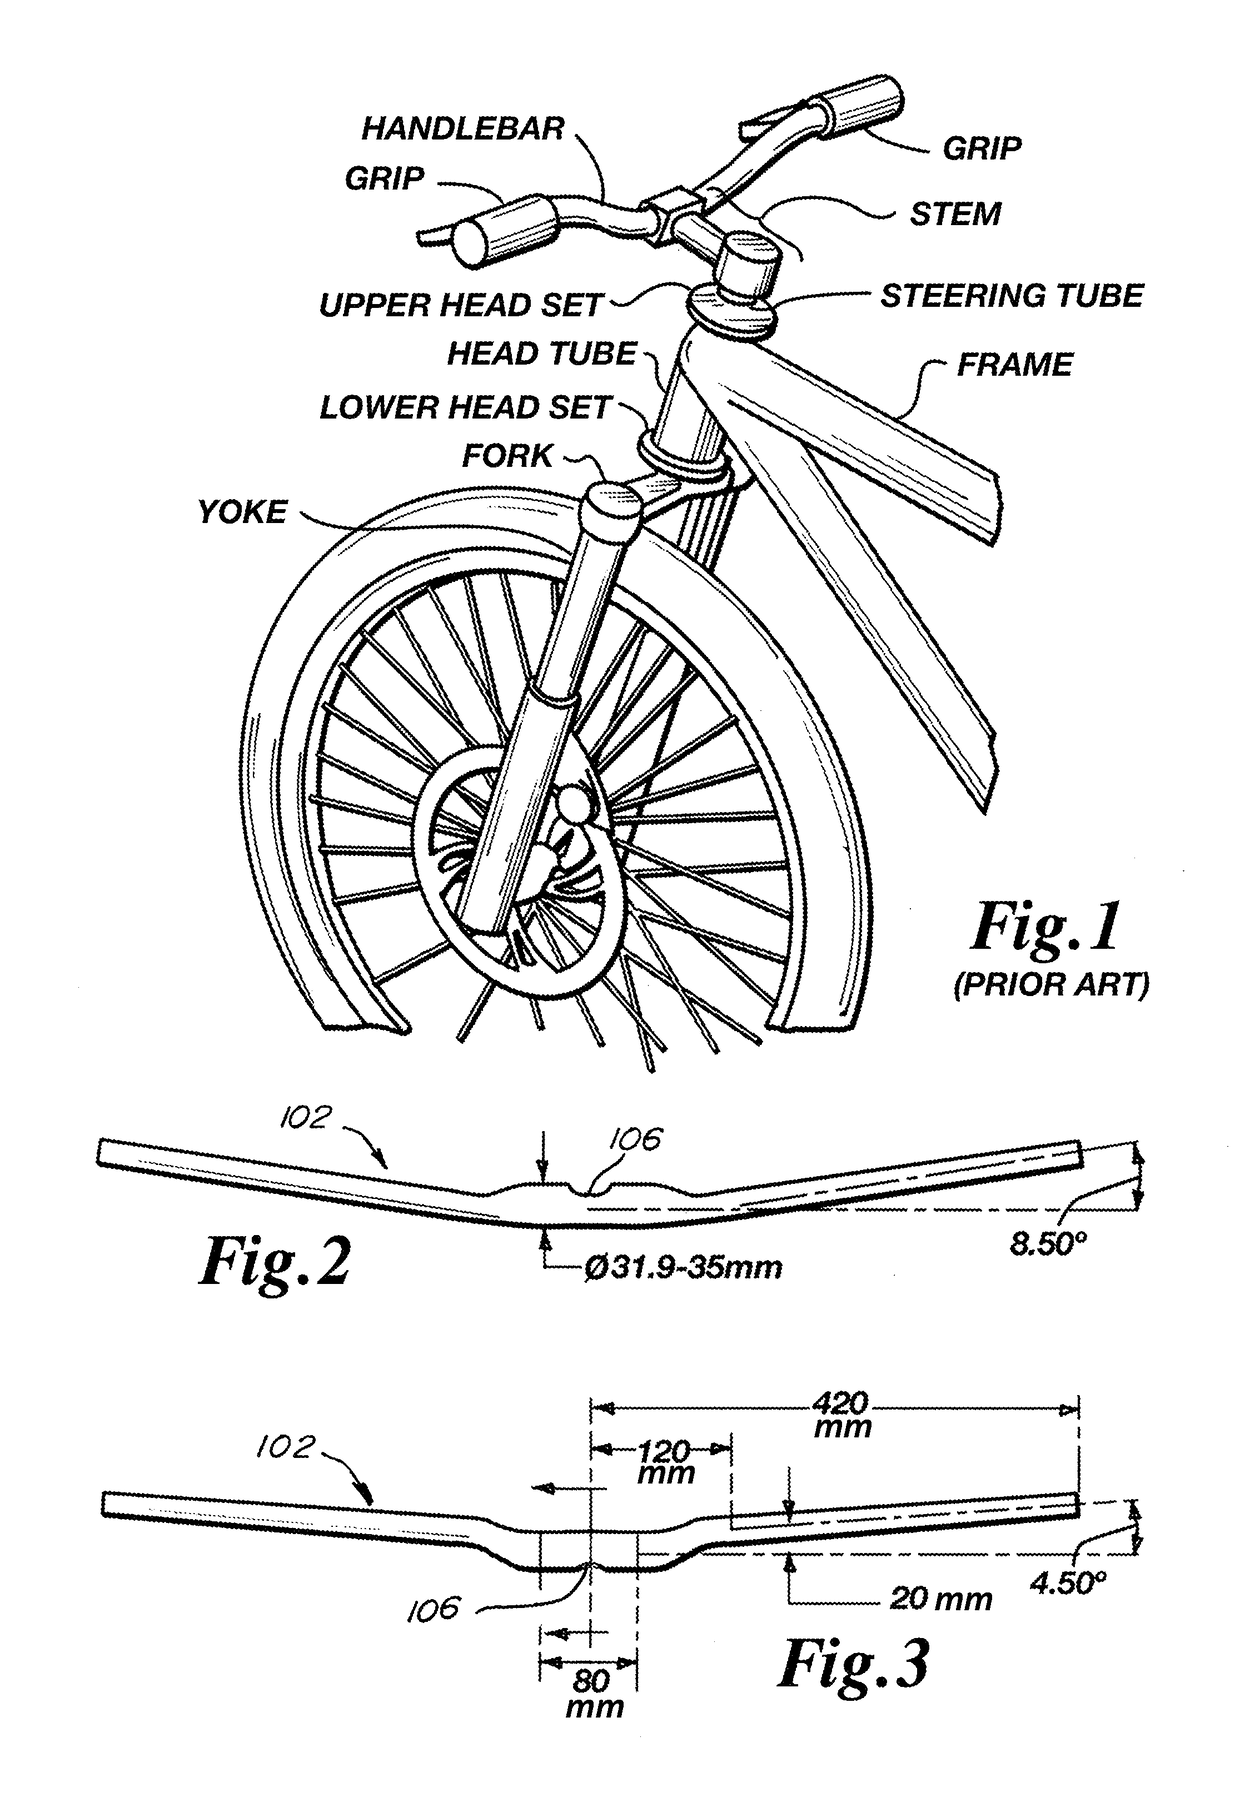 Bicycle handlebar, stem, and fork arrangement